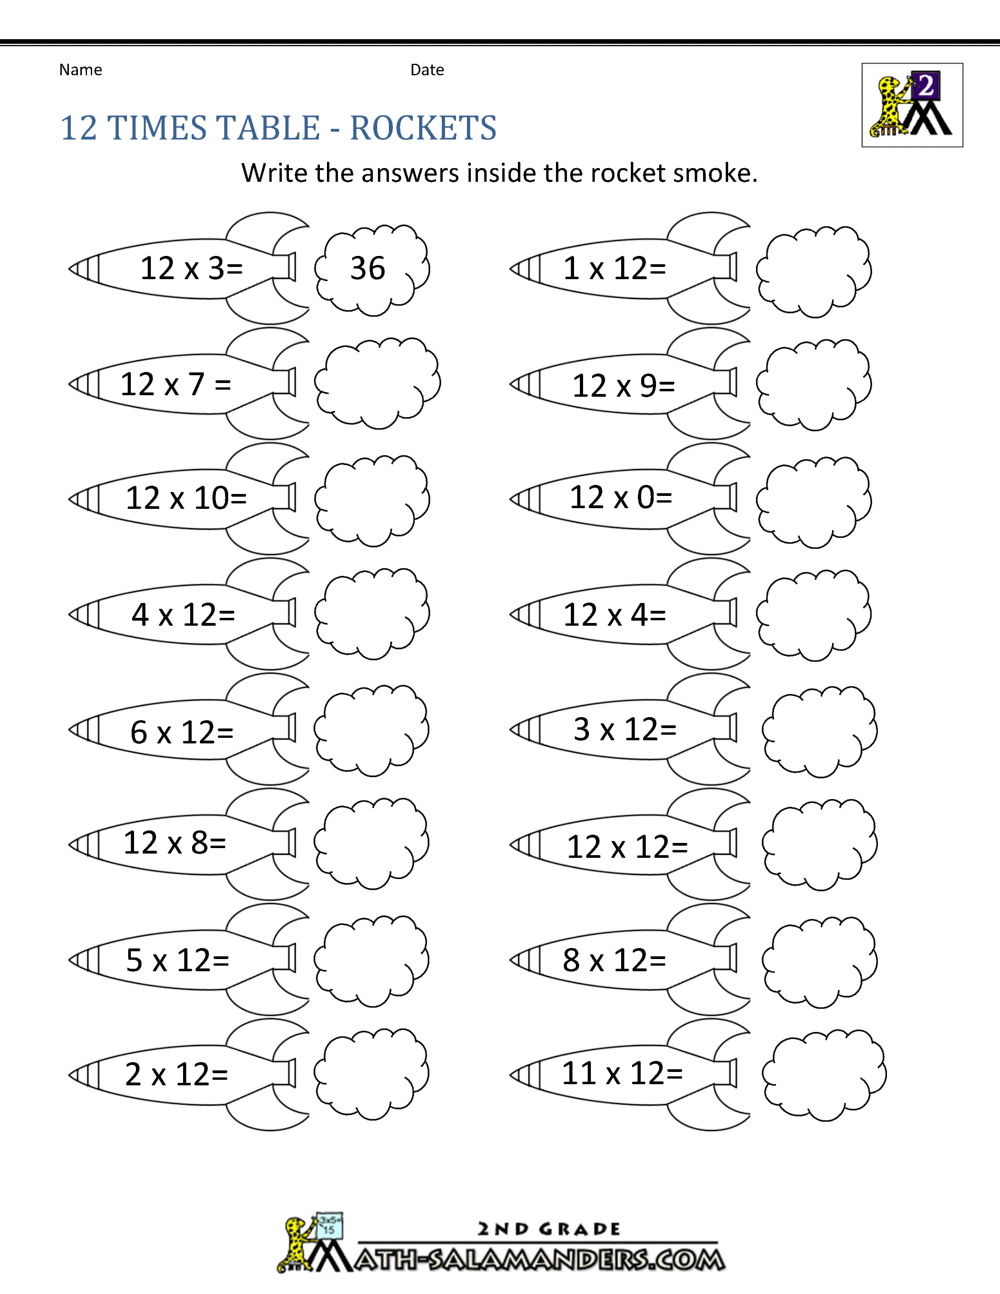 multiplication-tables-1-12-printable-worksheets-free-printable-multiplication-table-1-12-chart